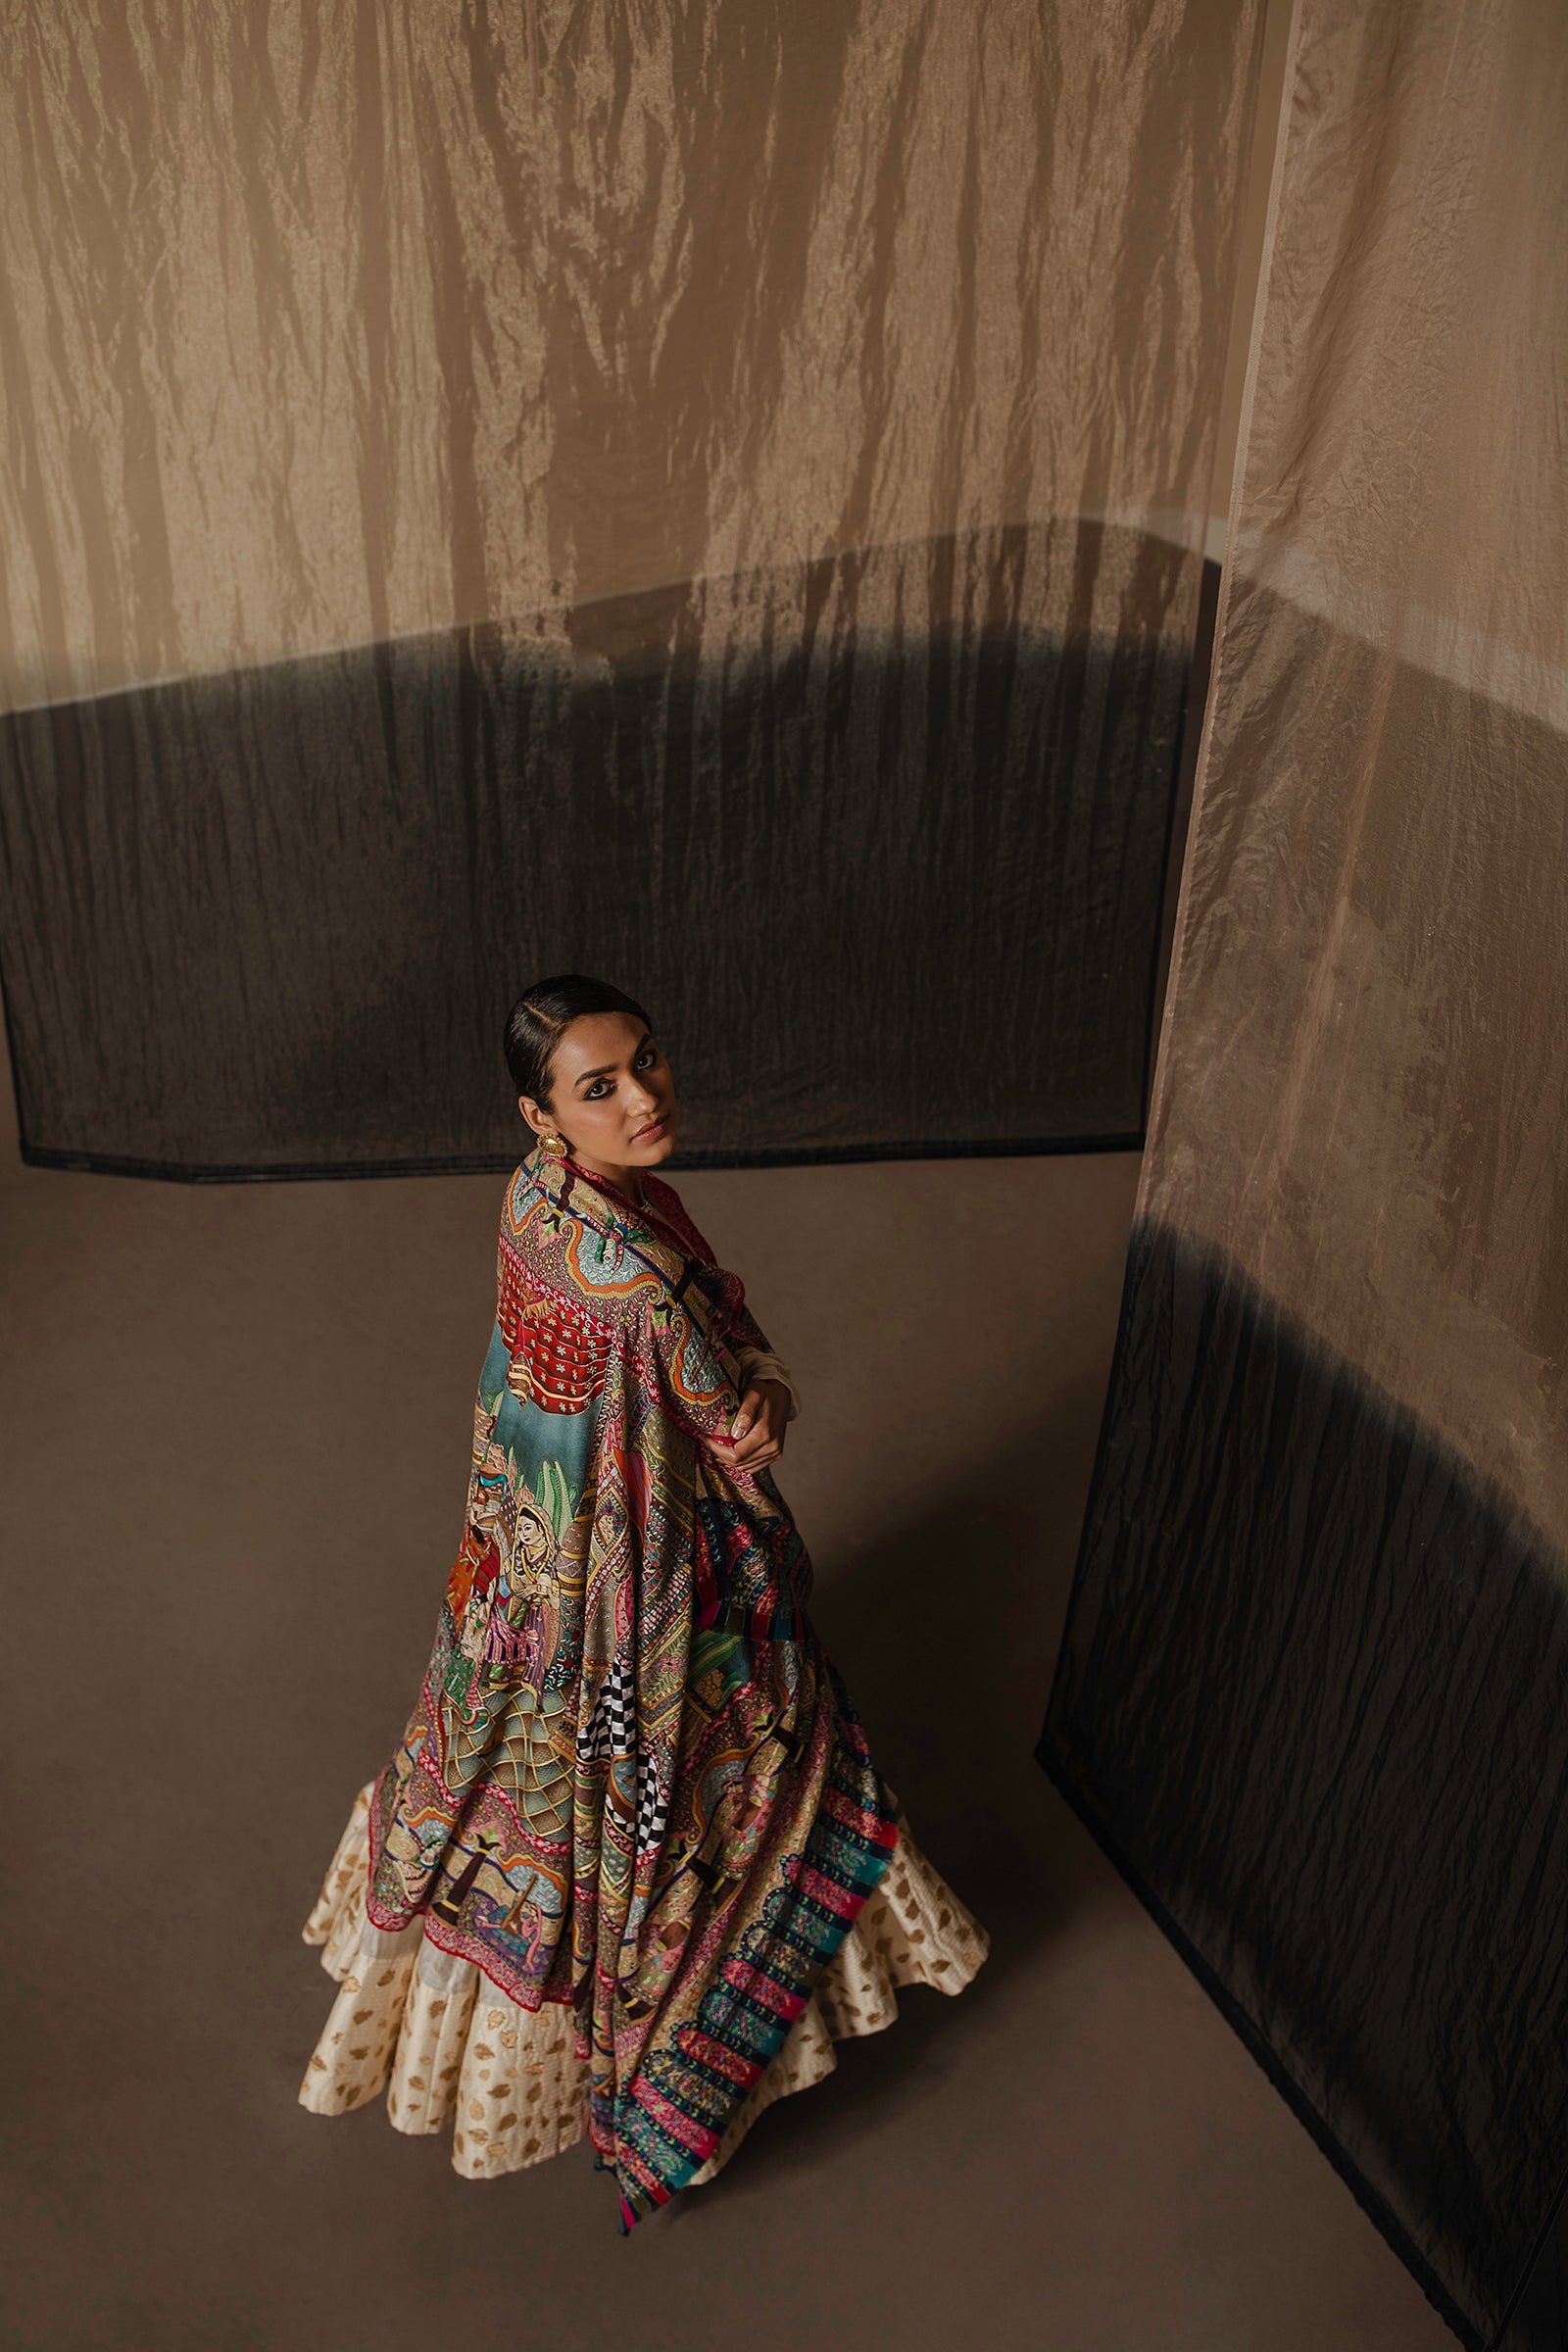 Model is wearing the Henna pashmina shawl from Shaza.